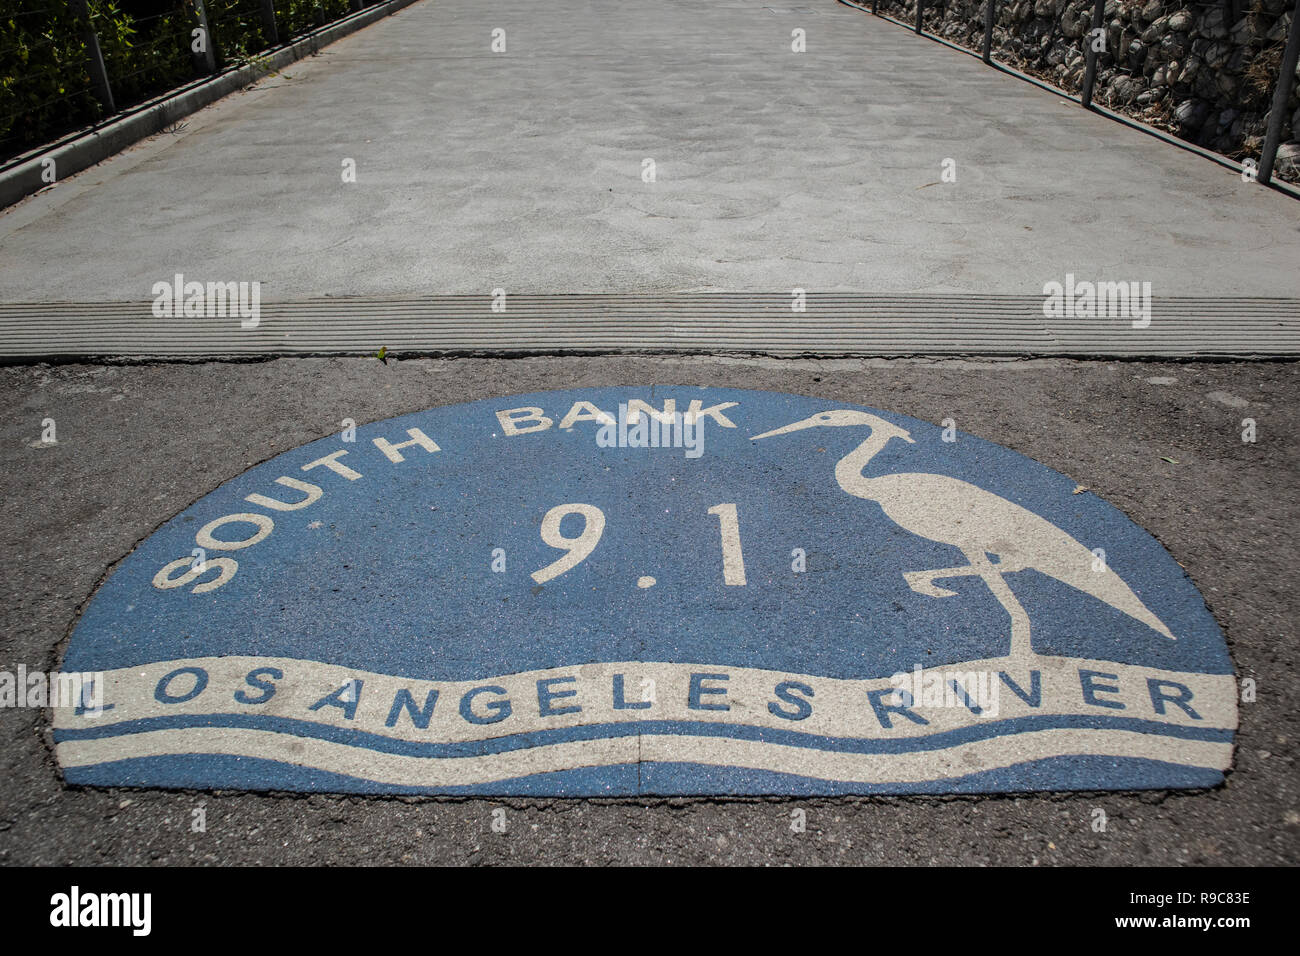 Los angeles Riverfront Greenway. Los Angeles River, Van Nuys, Californie, USA Banque D'Images